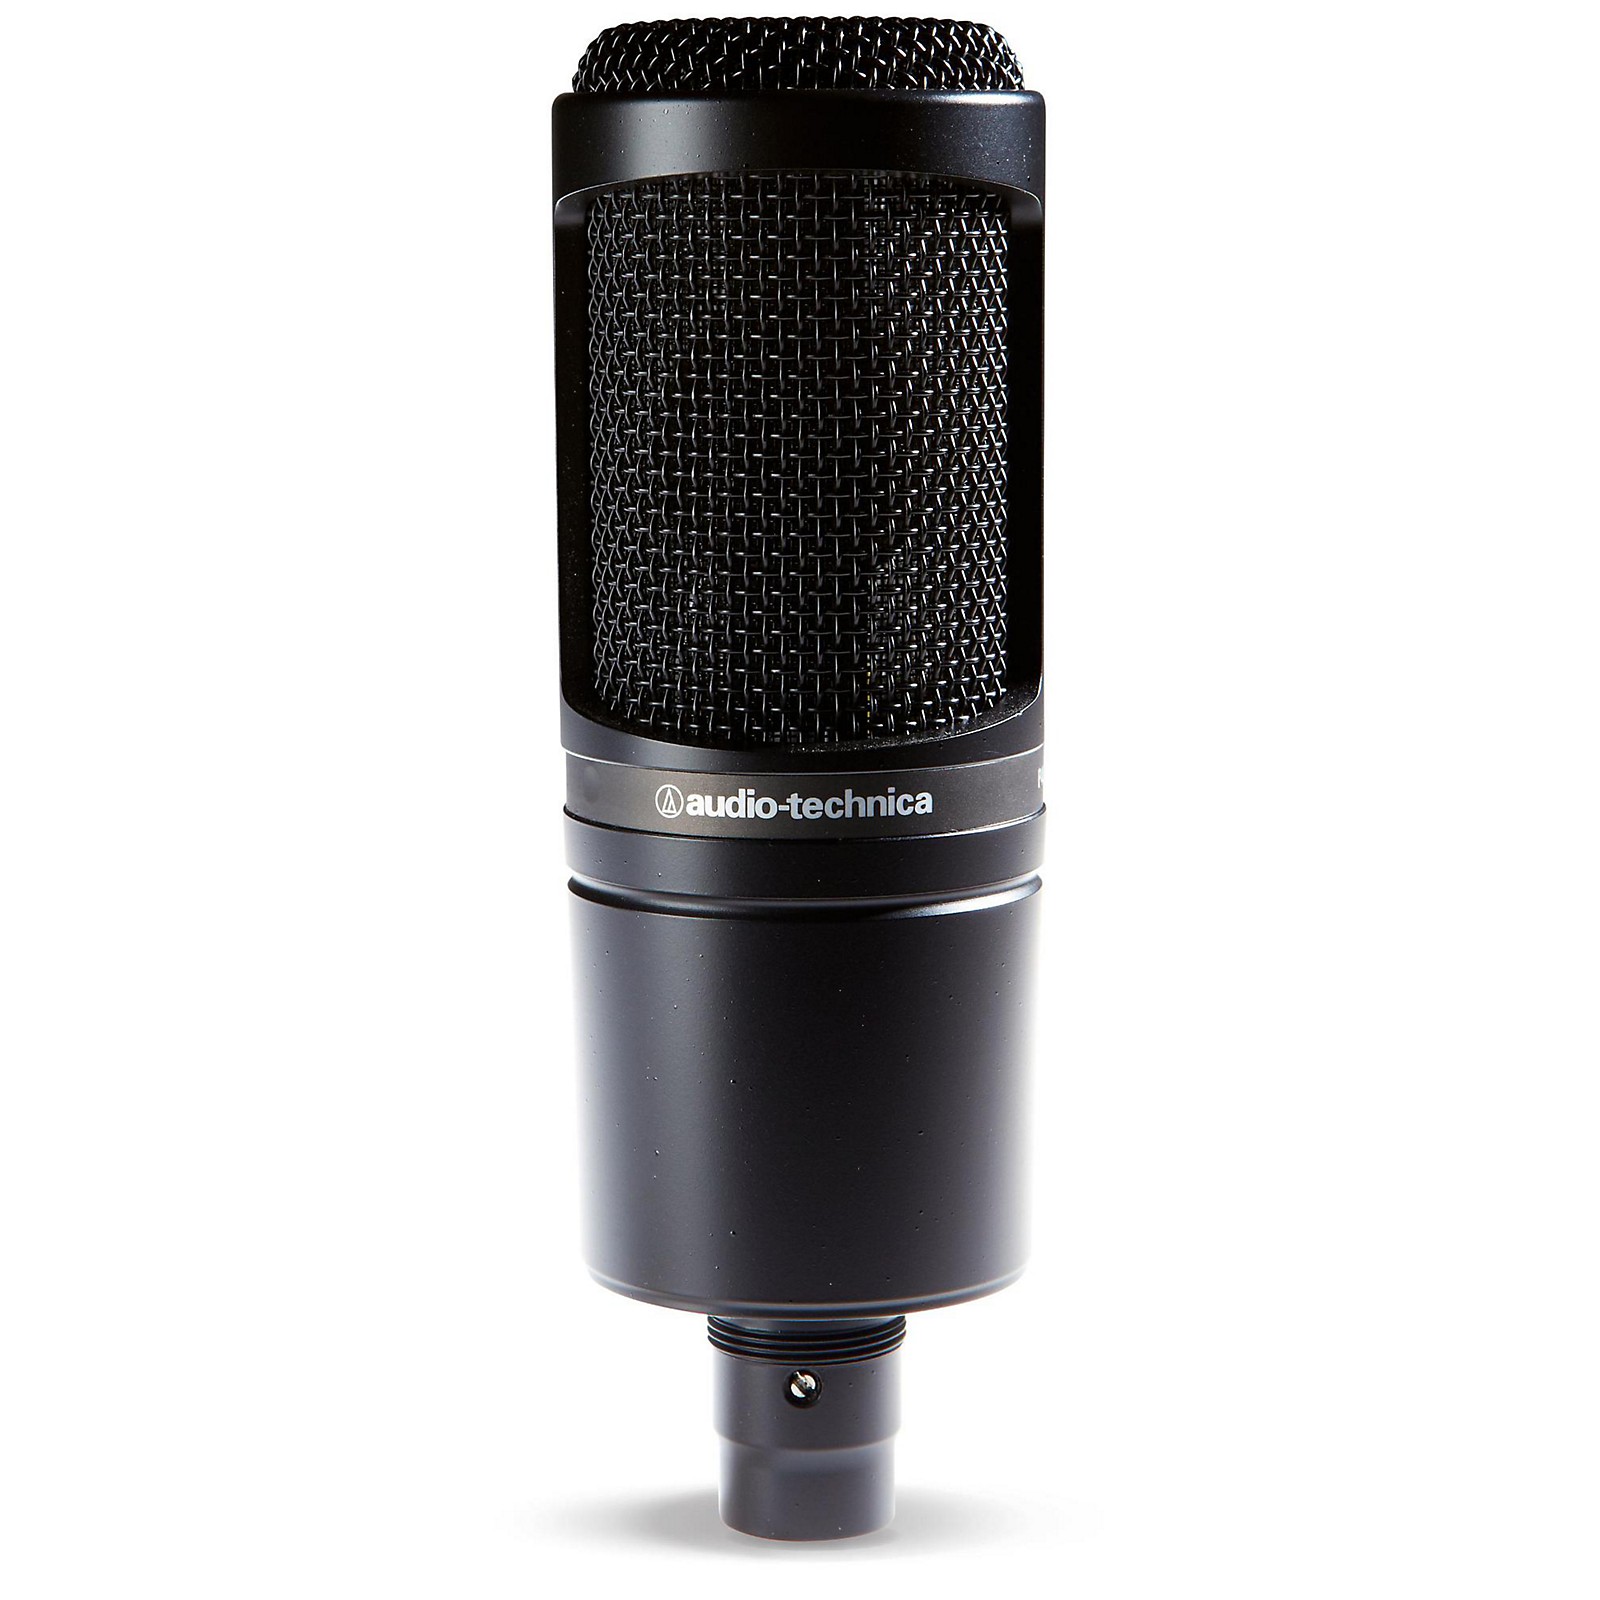 Audio-Technica Studio Mic Case For Floureon BM-800 Case Only Audio Technica AT2020 Microphone 